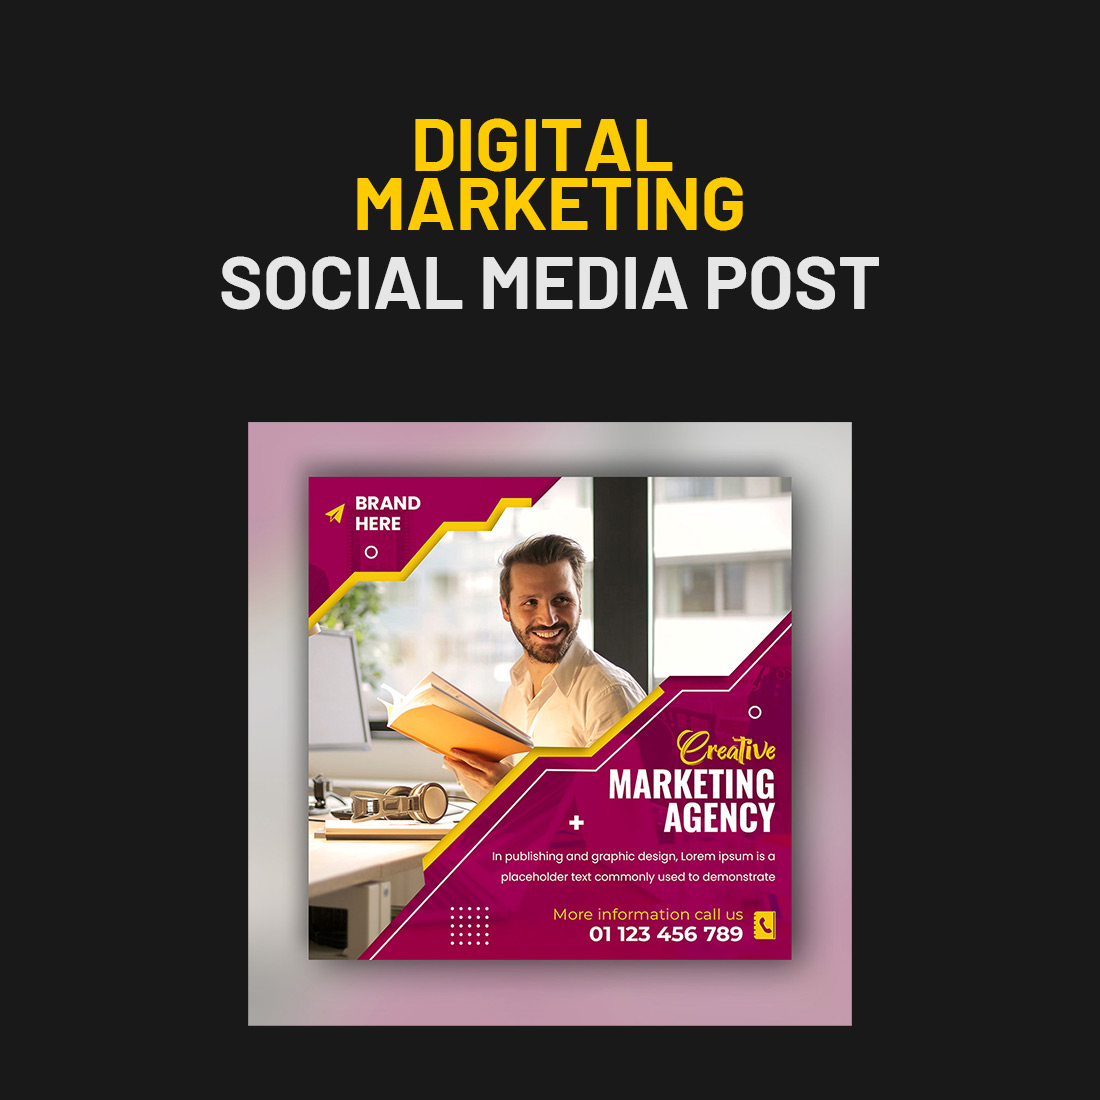 Social media post for a digital marketing company.